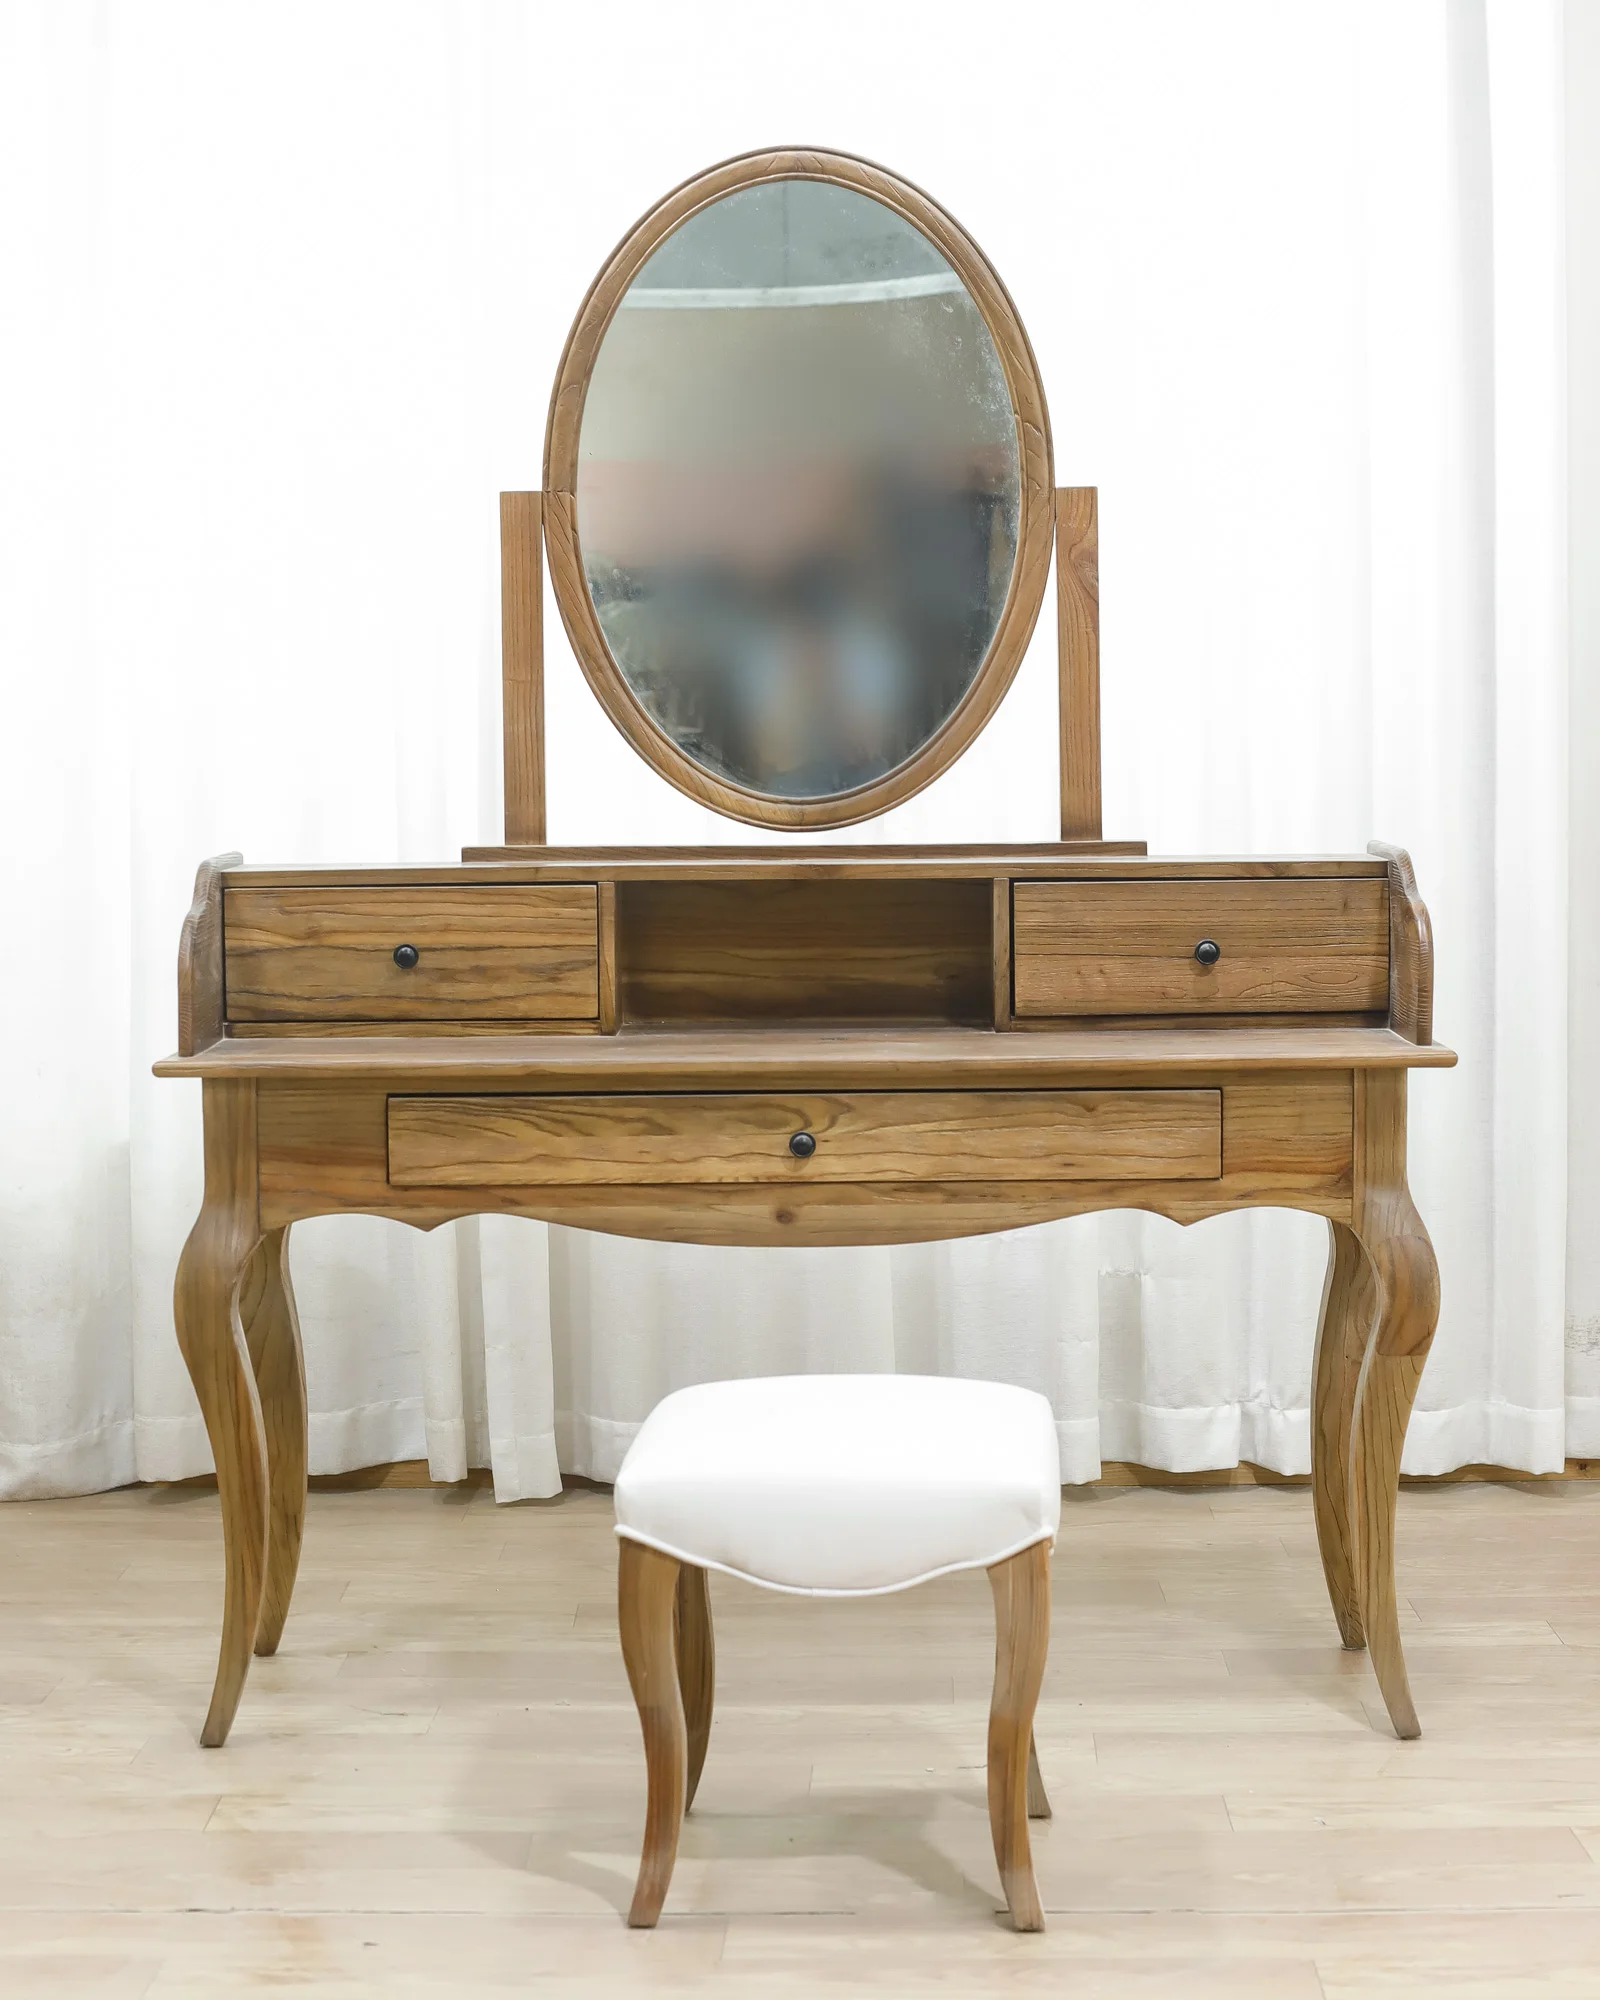 
European Style Bedroom furniture Antique Makeup Vanity Dresser Desk with mirror and stool  (1600094078100)